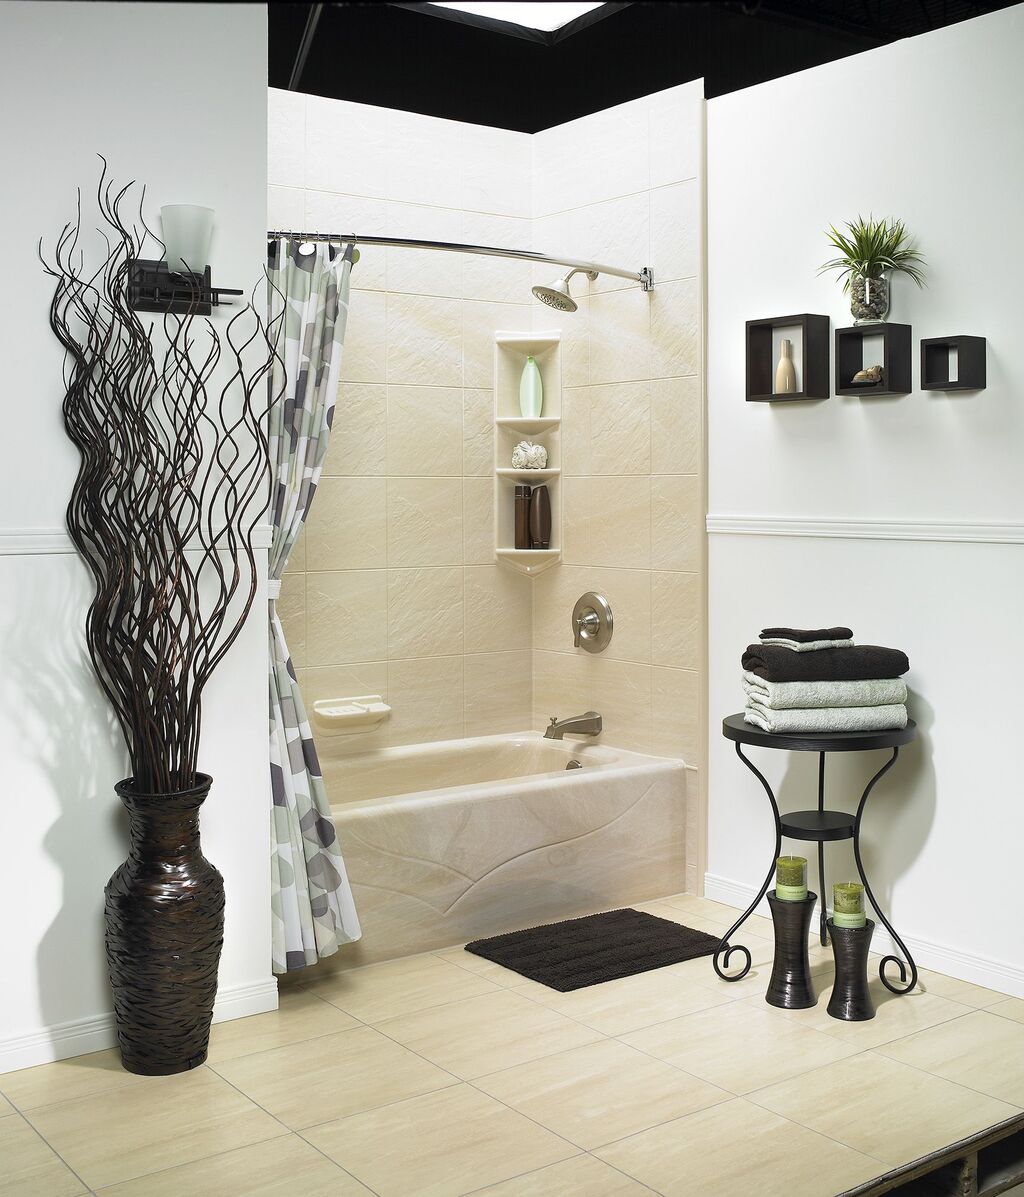 bath fitter bathroom design